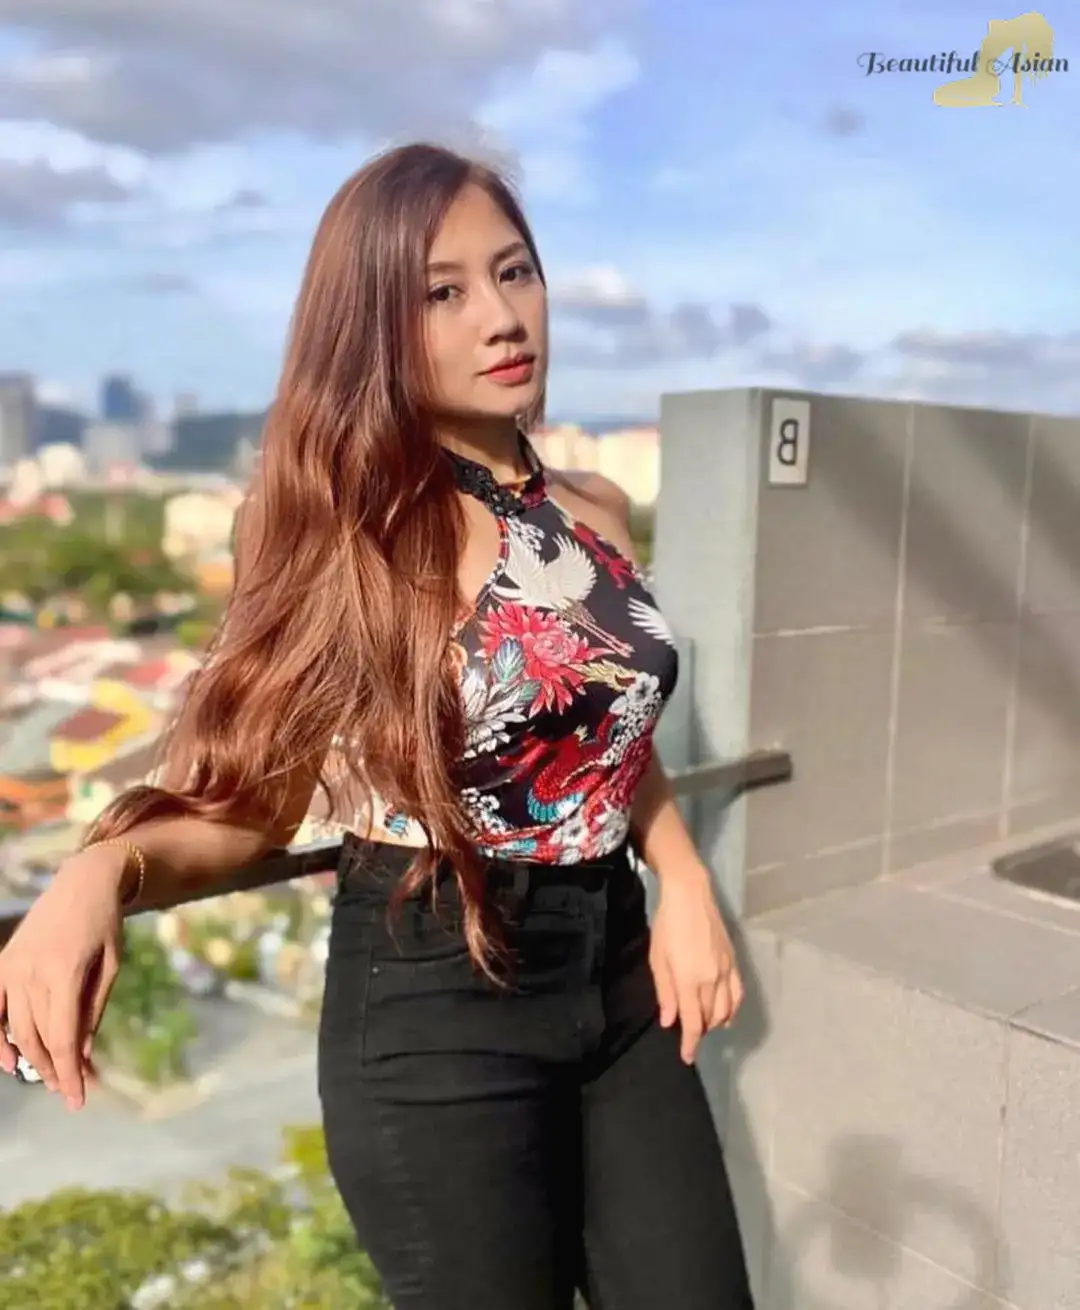 bewitching Malaysian women portrait